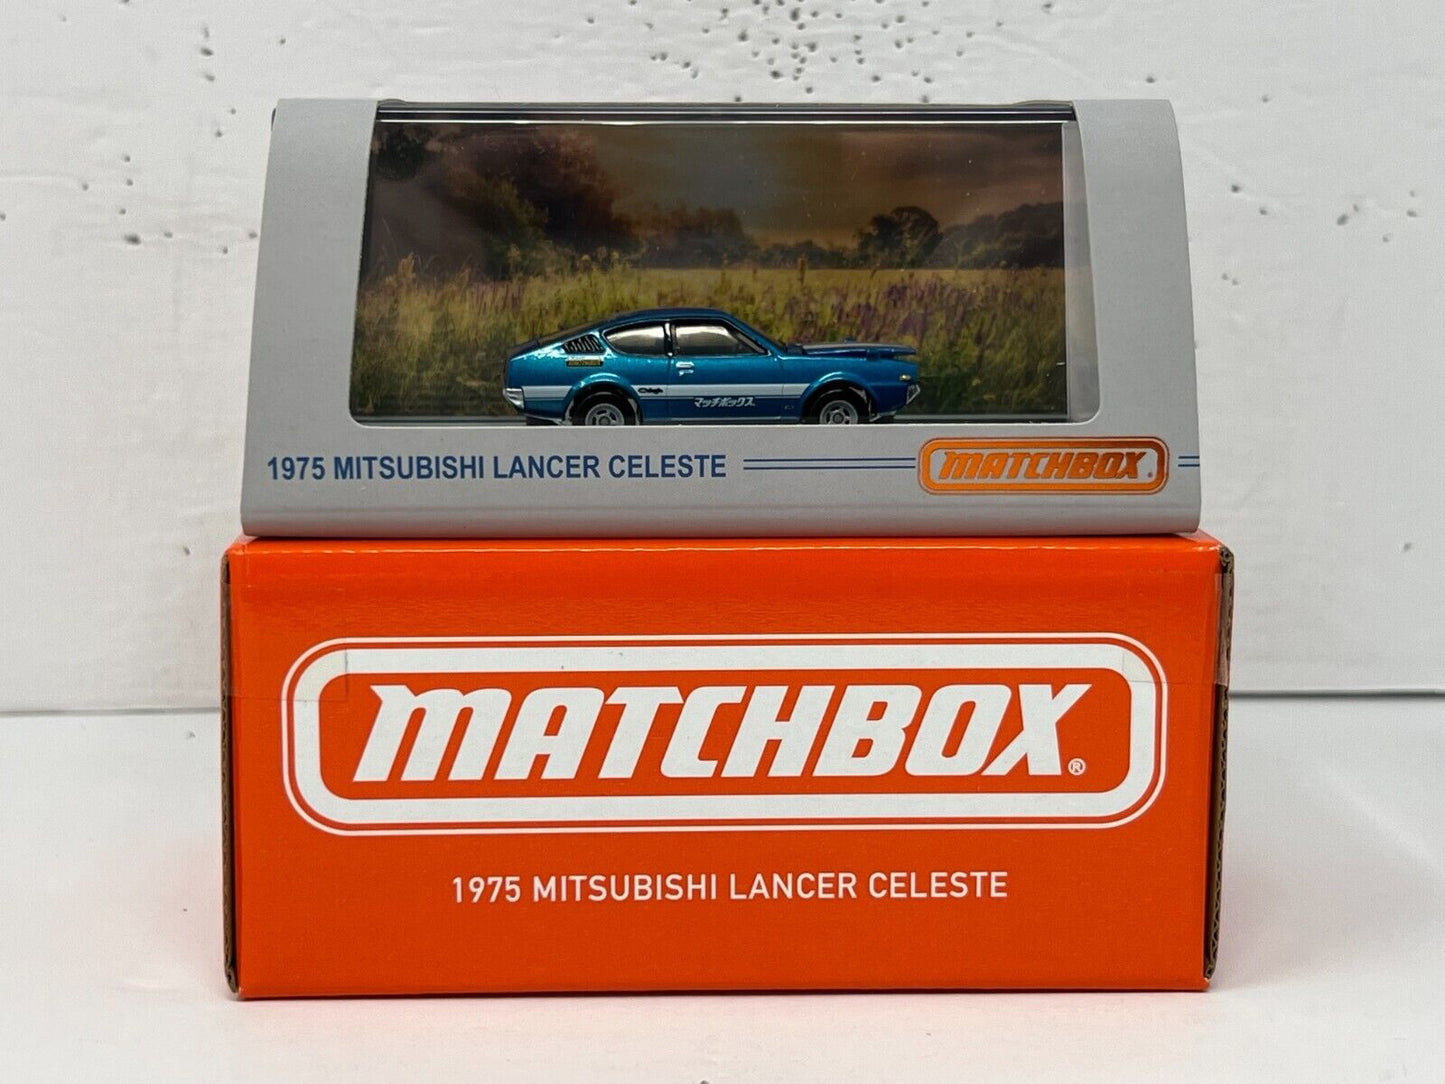 Matchbox Mattel Creations 1975 Mitsubishi Lancer Celeste 1:64 Diecast